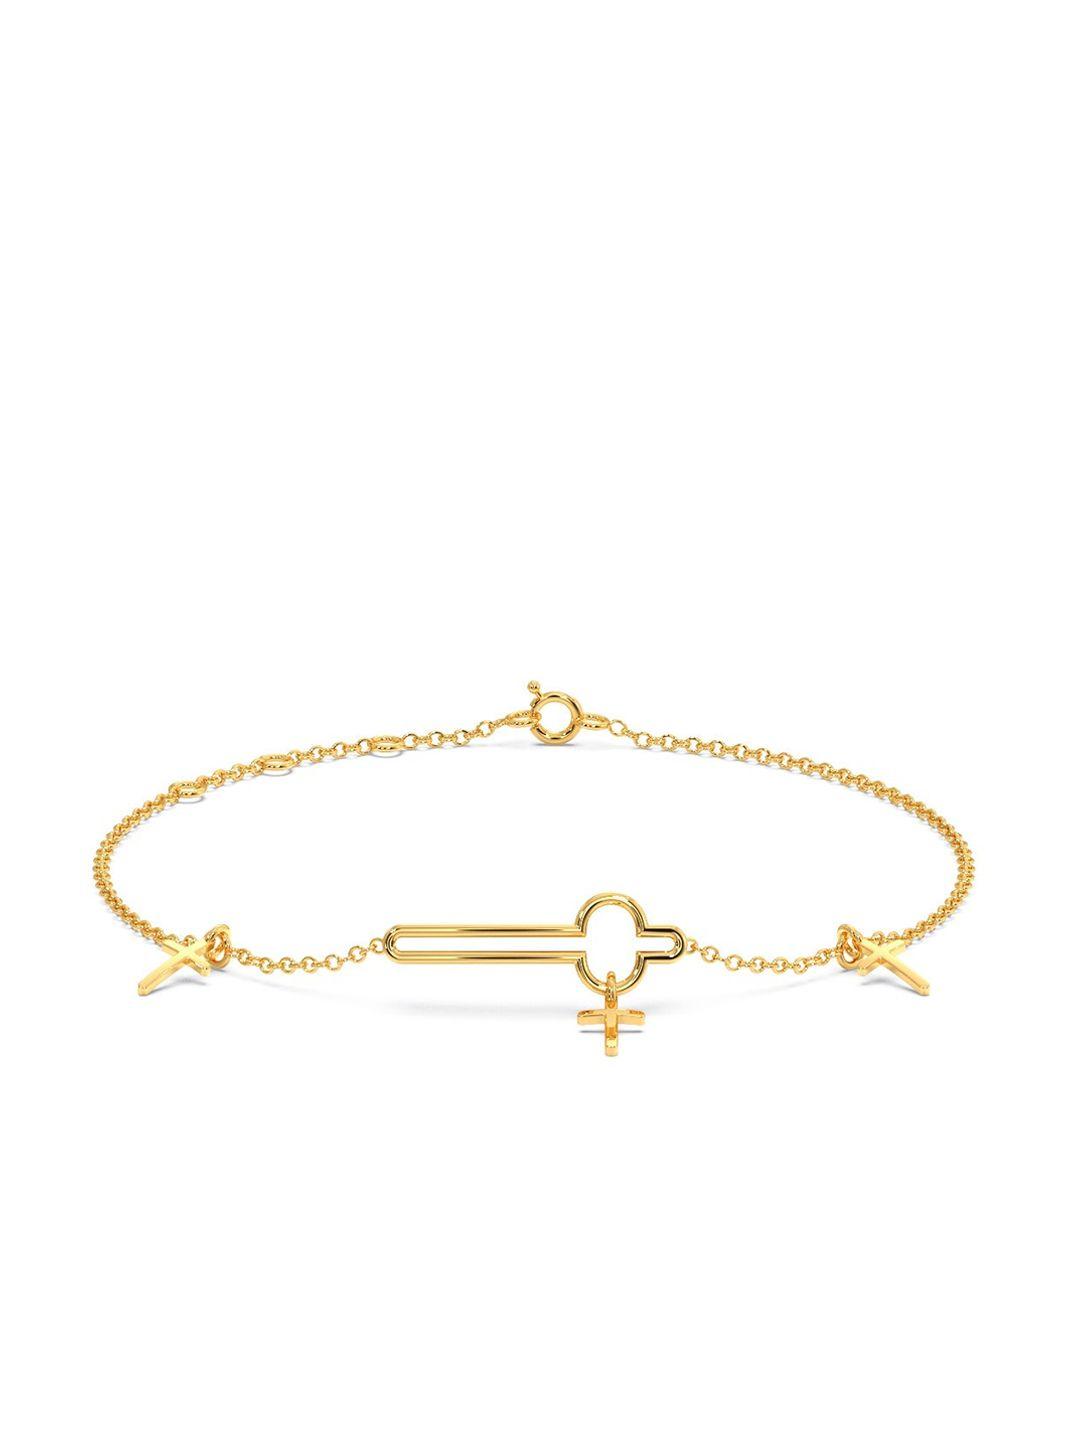 candere a kalyan jewellers company 18kt bis hallmark gold bracelet-1.31 g